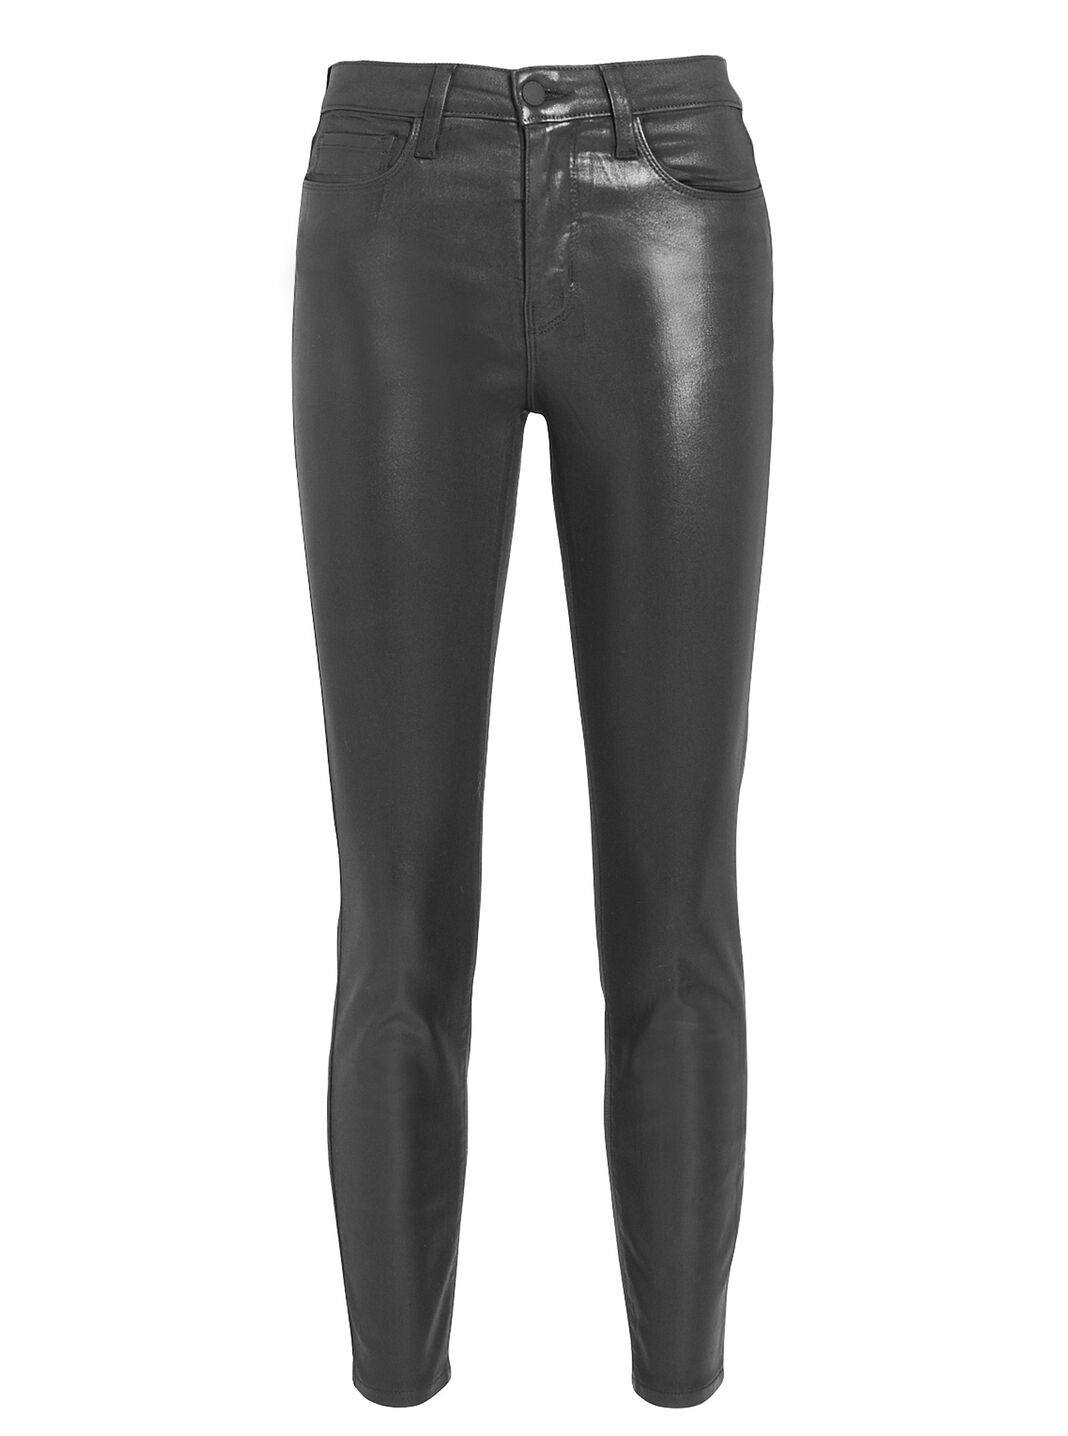 Adelaide Skinny Leather Pants